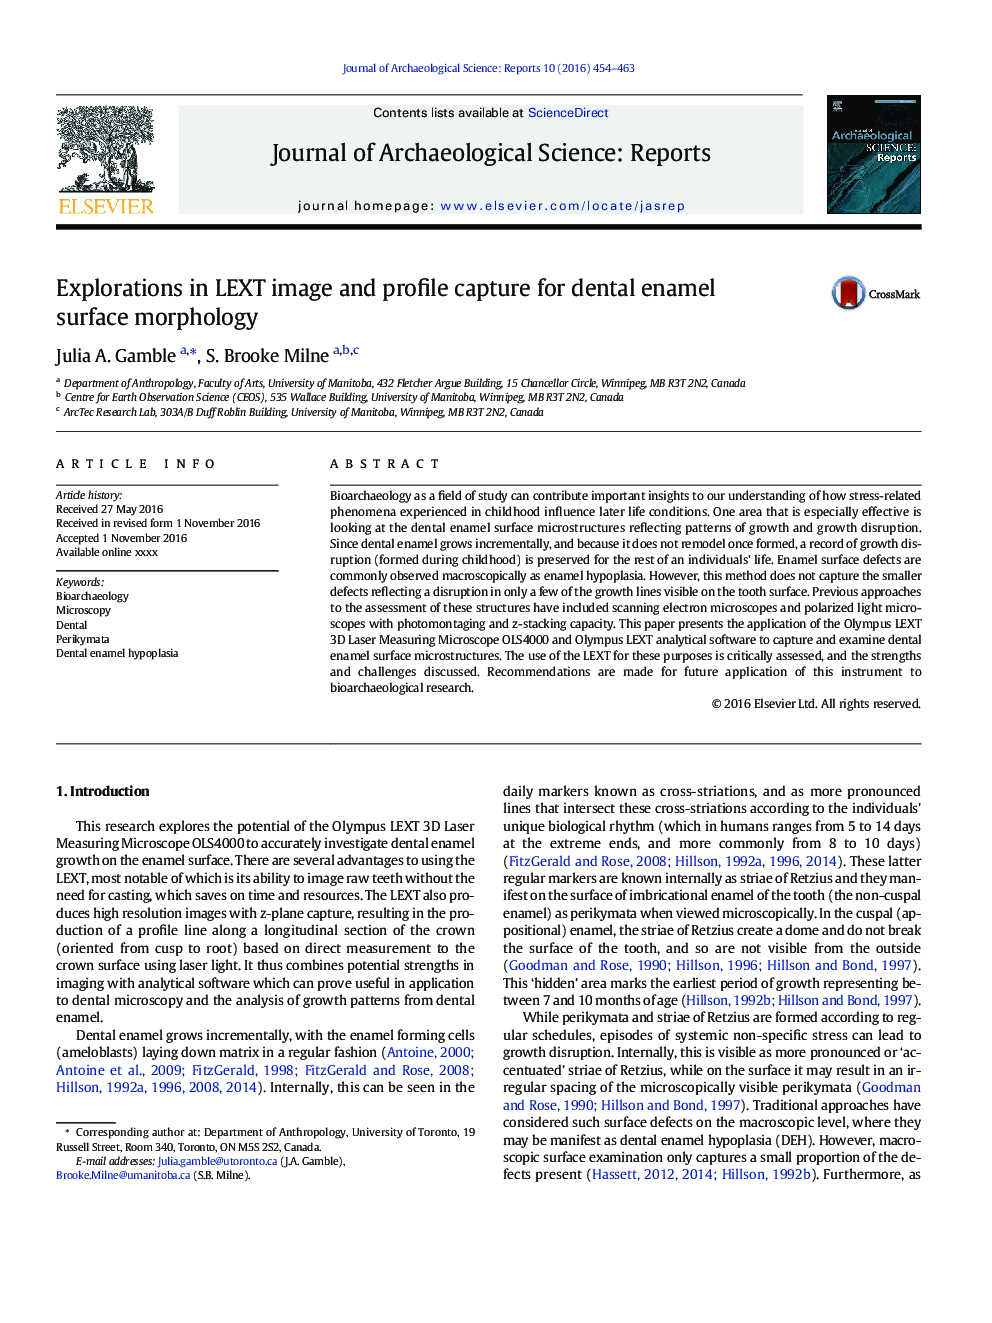 Explorations in LEXT image and profile capture for dental enamel surface morphology